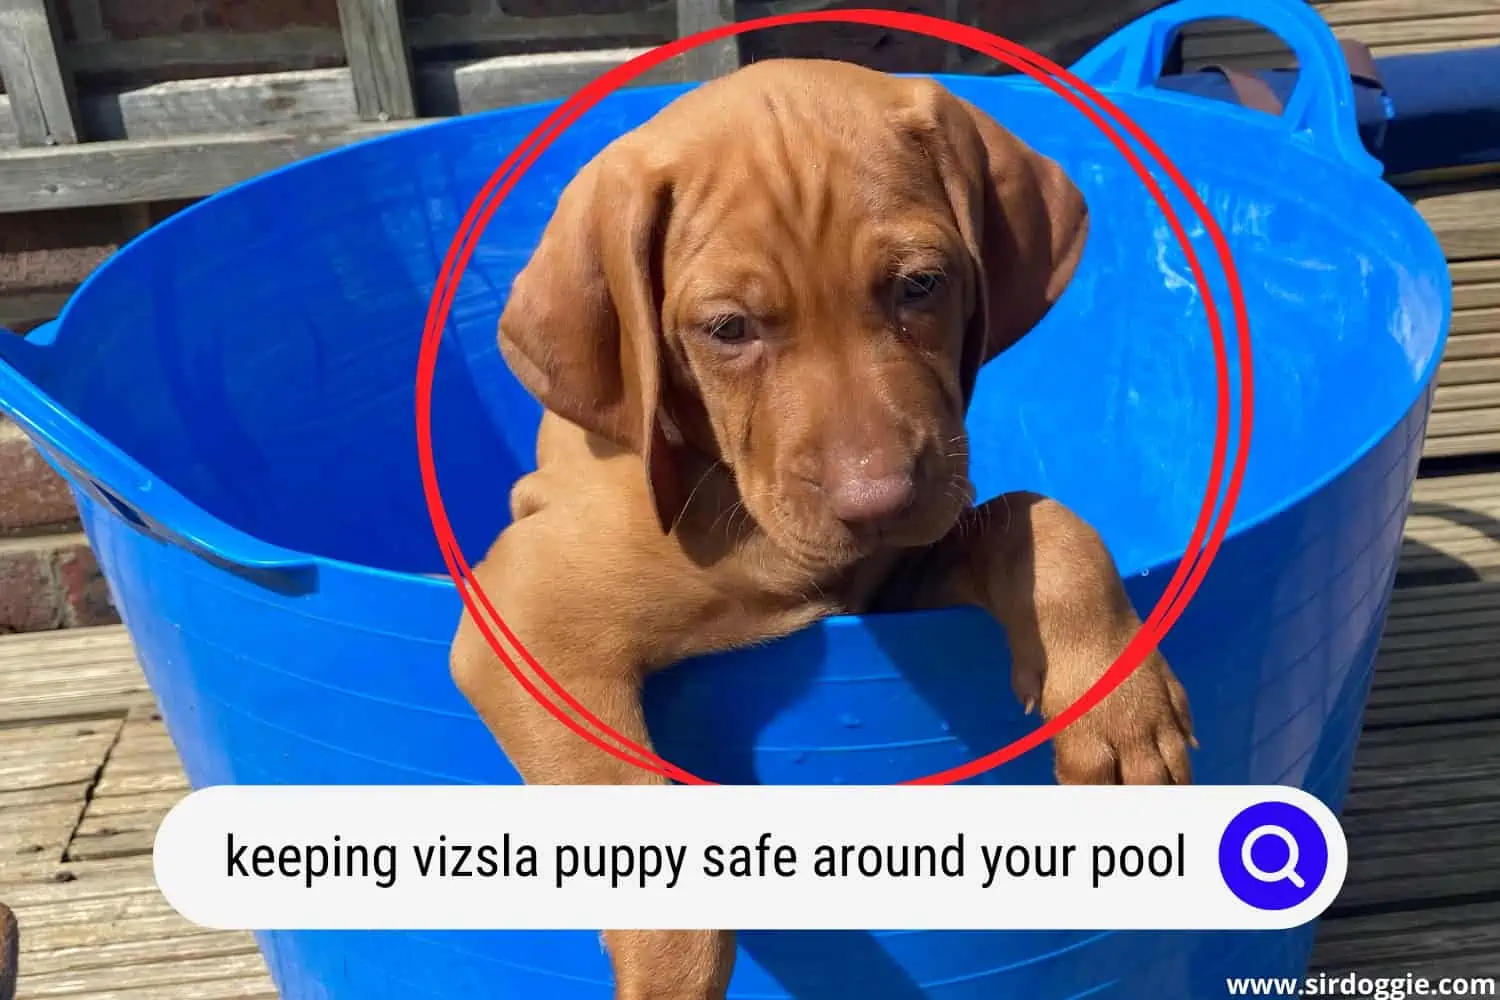 Vizsla puppy inside a blue bucket